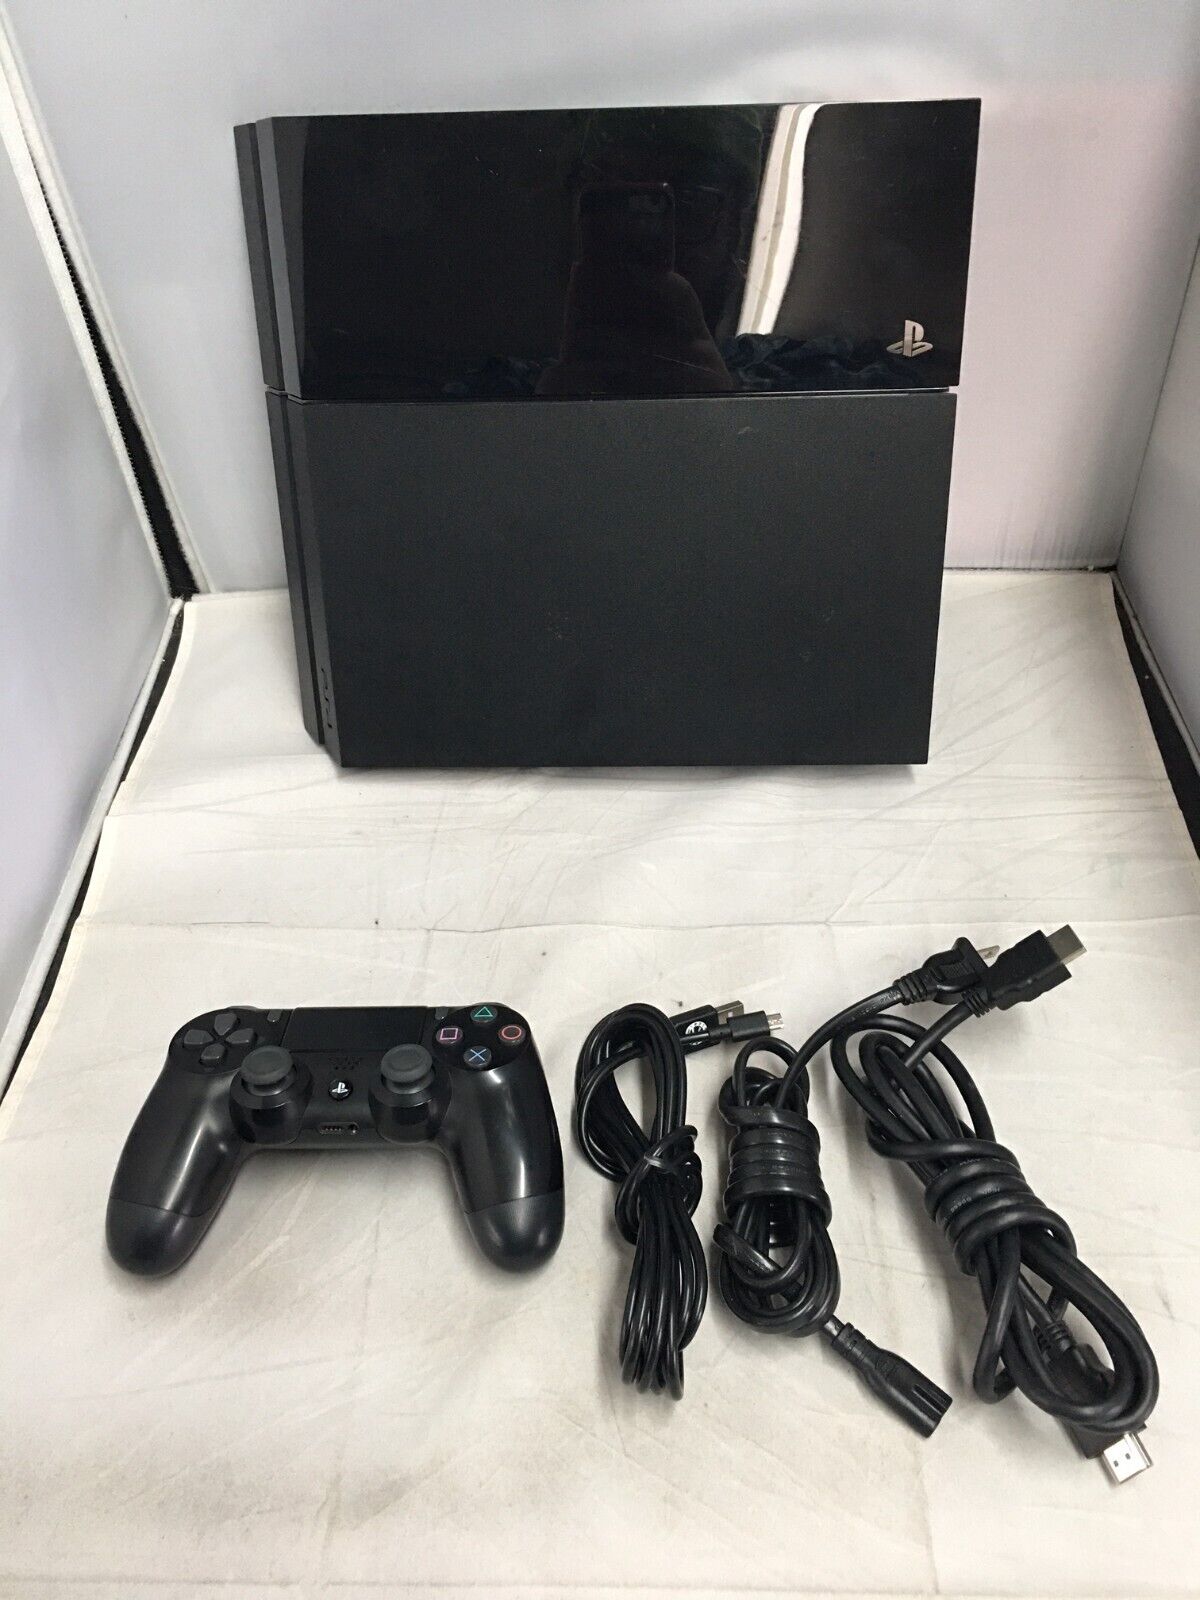 (LUPSYS50) Sony PlayStation 4 500GB Console - Black